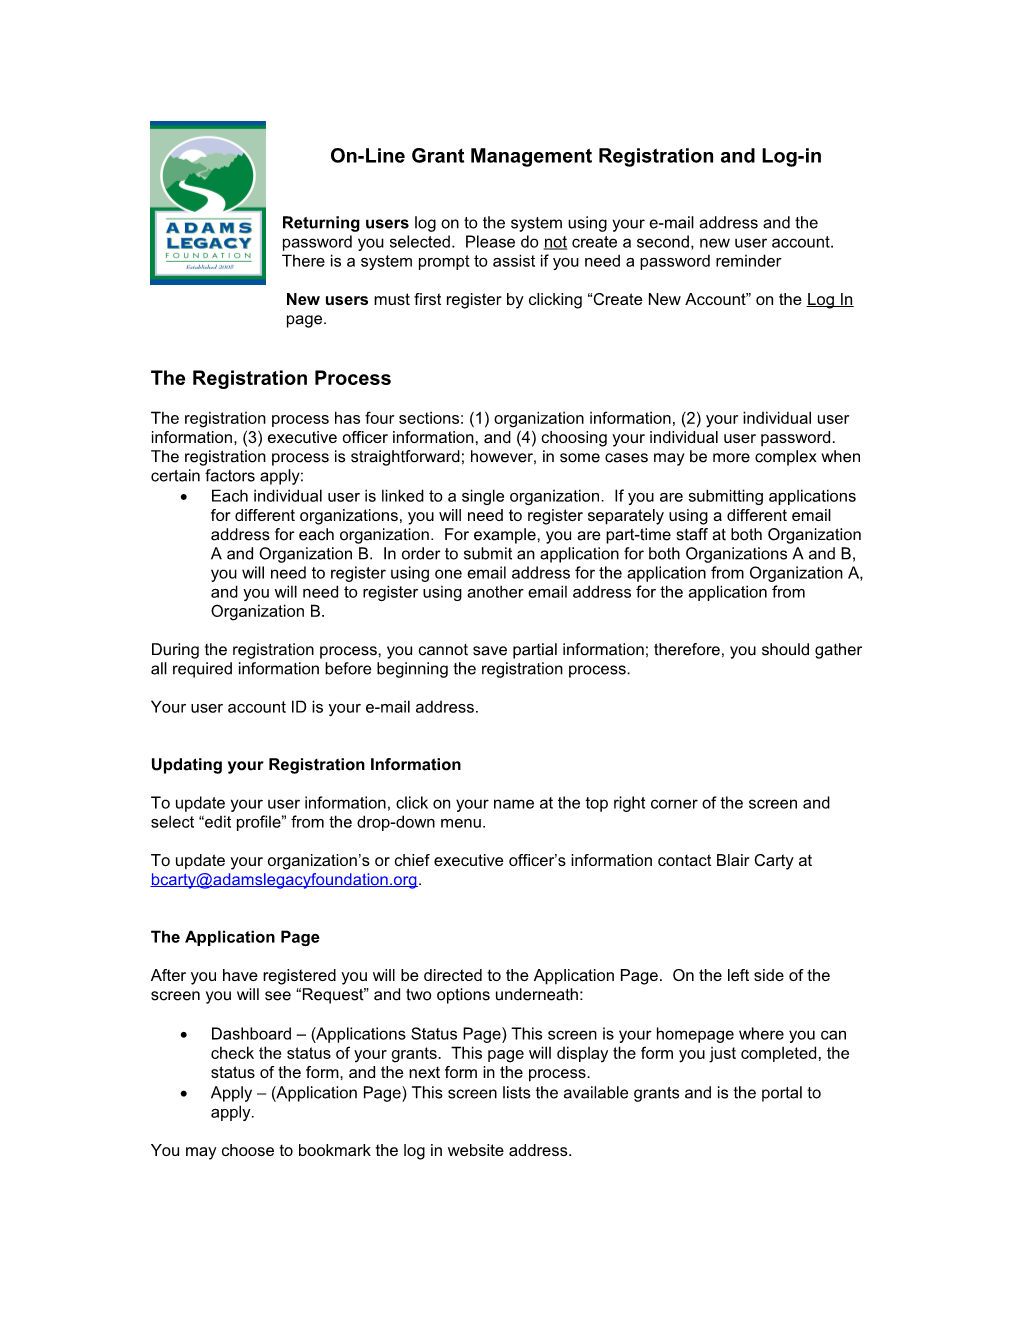 On-Line Grant Managementregistration and Log-In